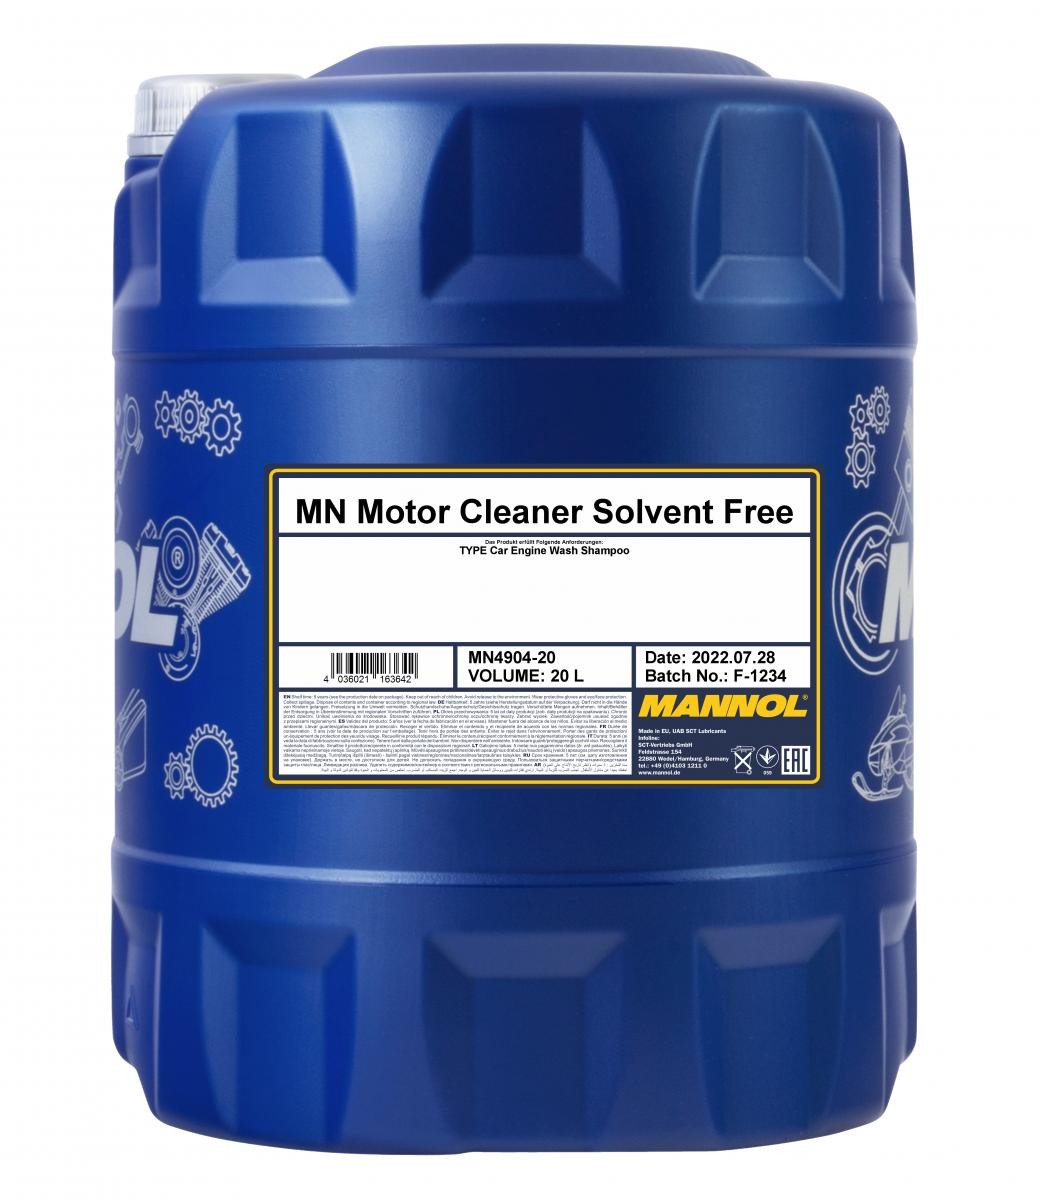 MANNOL Engine Cleaner Motor Cleaner, Solvent Free MN490420